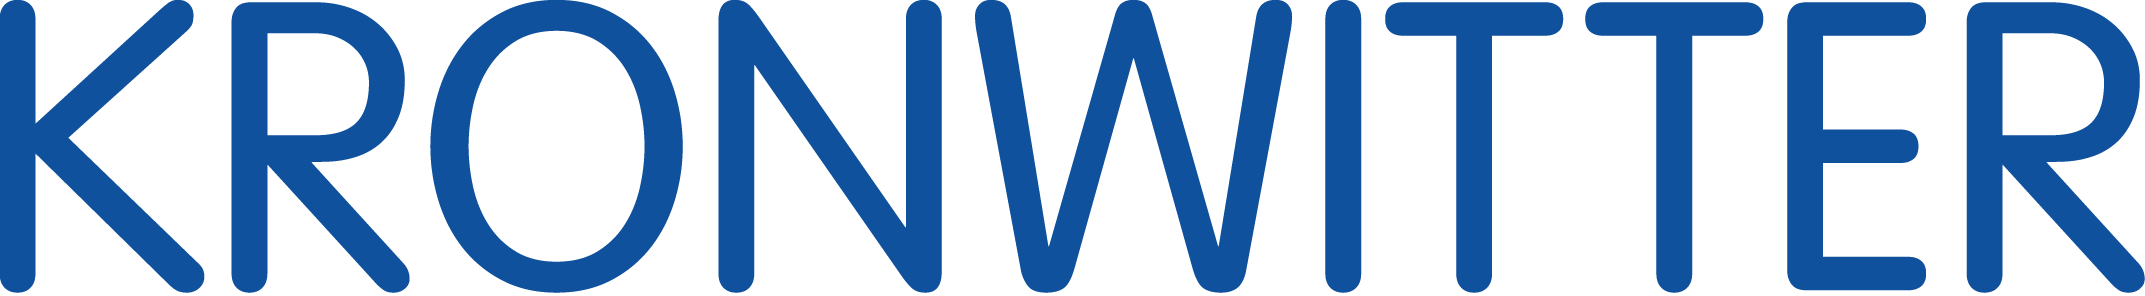 KRONWITTER-Logo